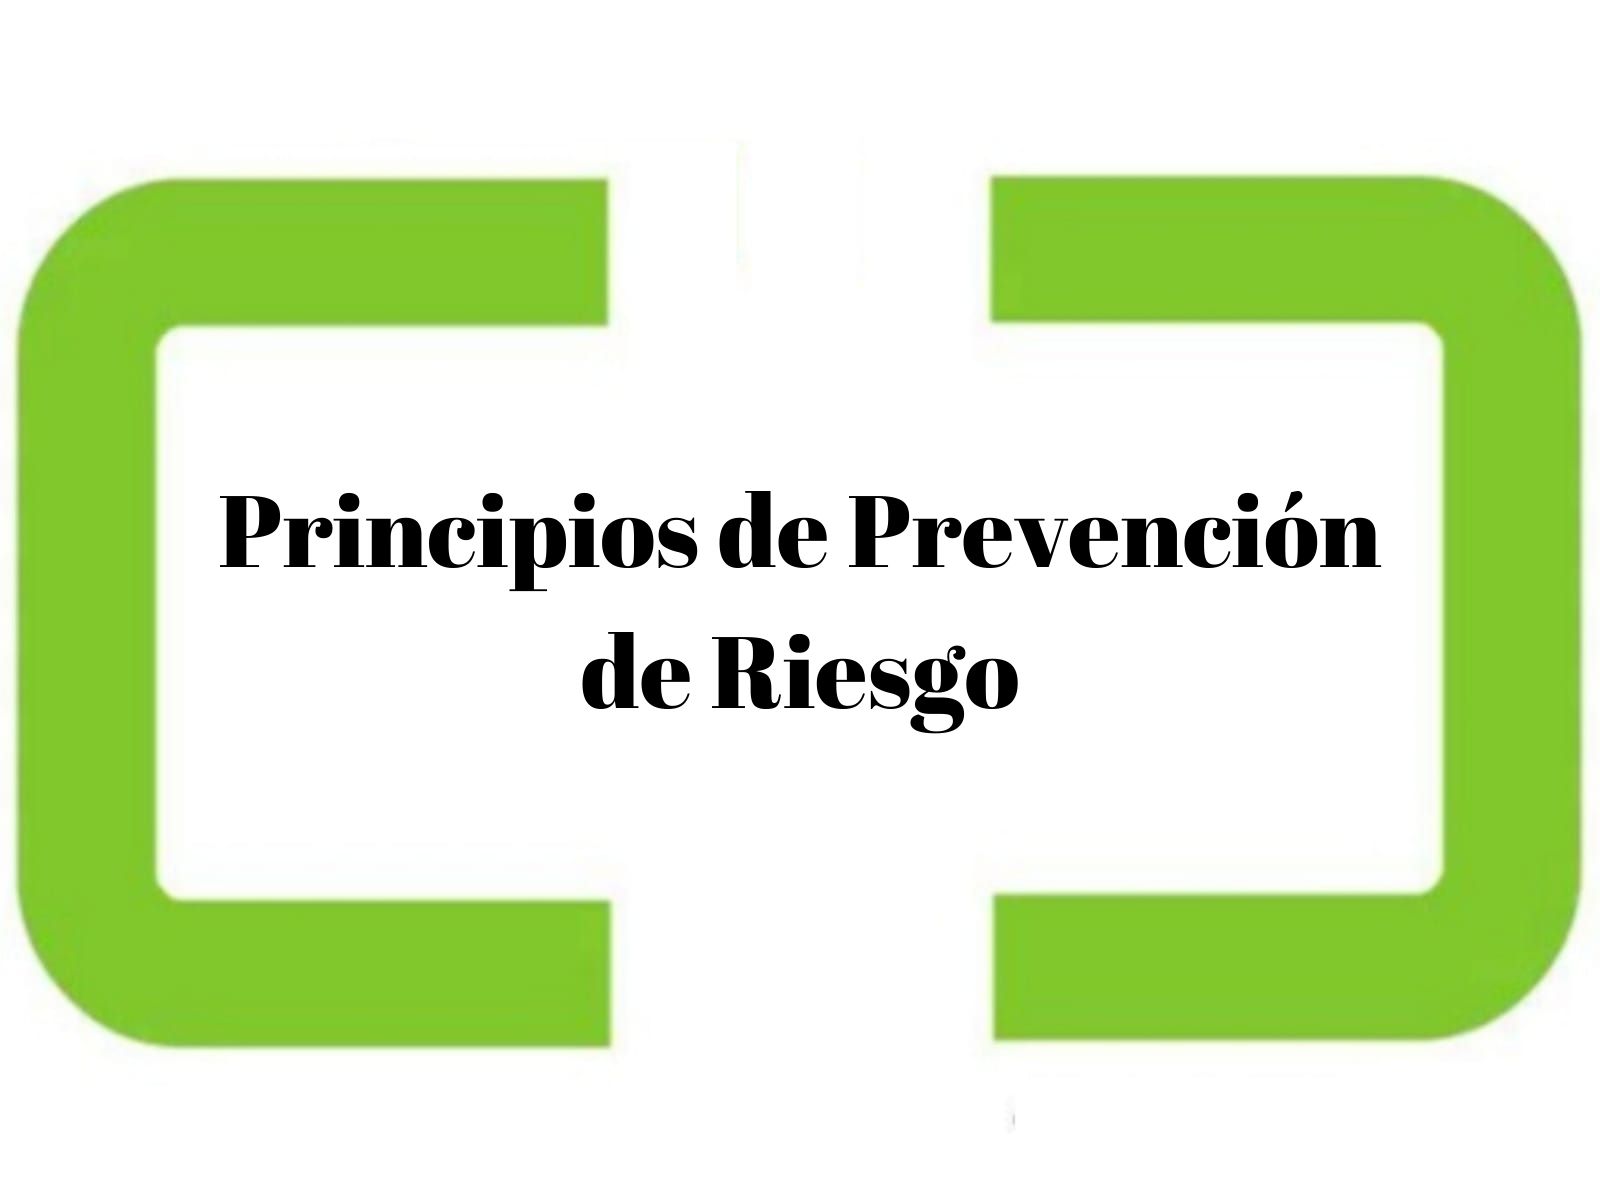 Principios de Prevención de Riesgo